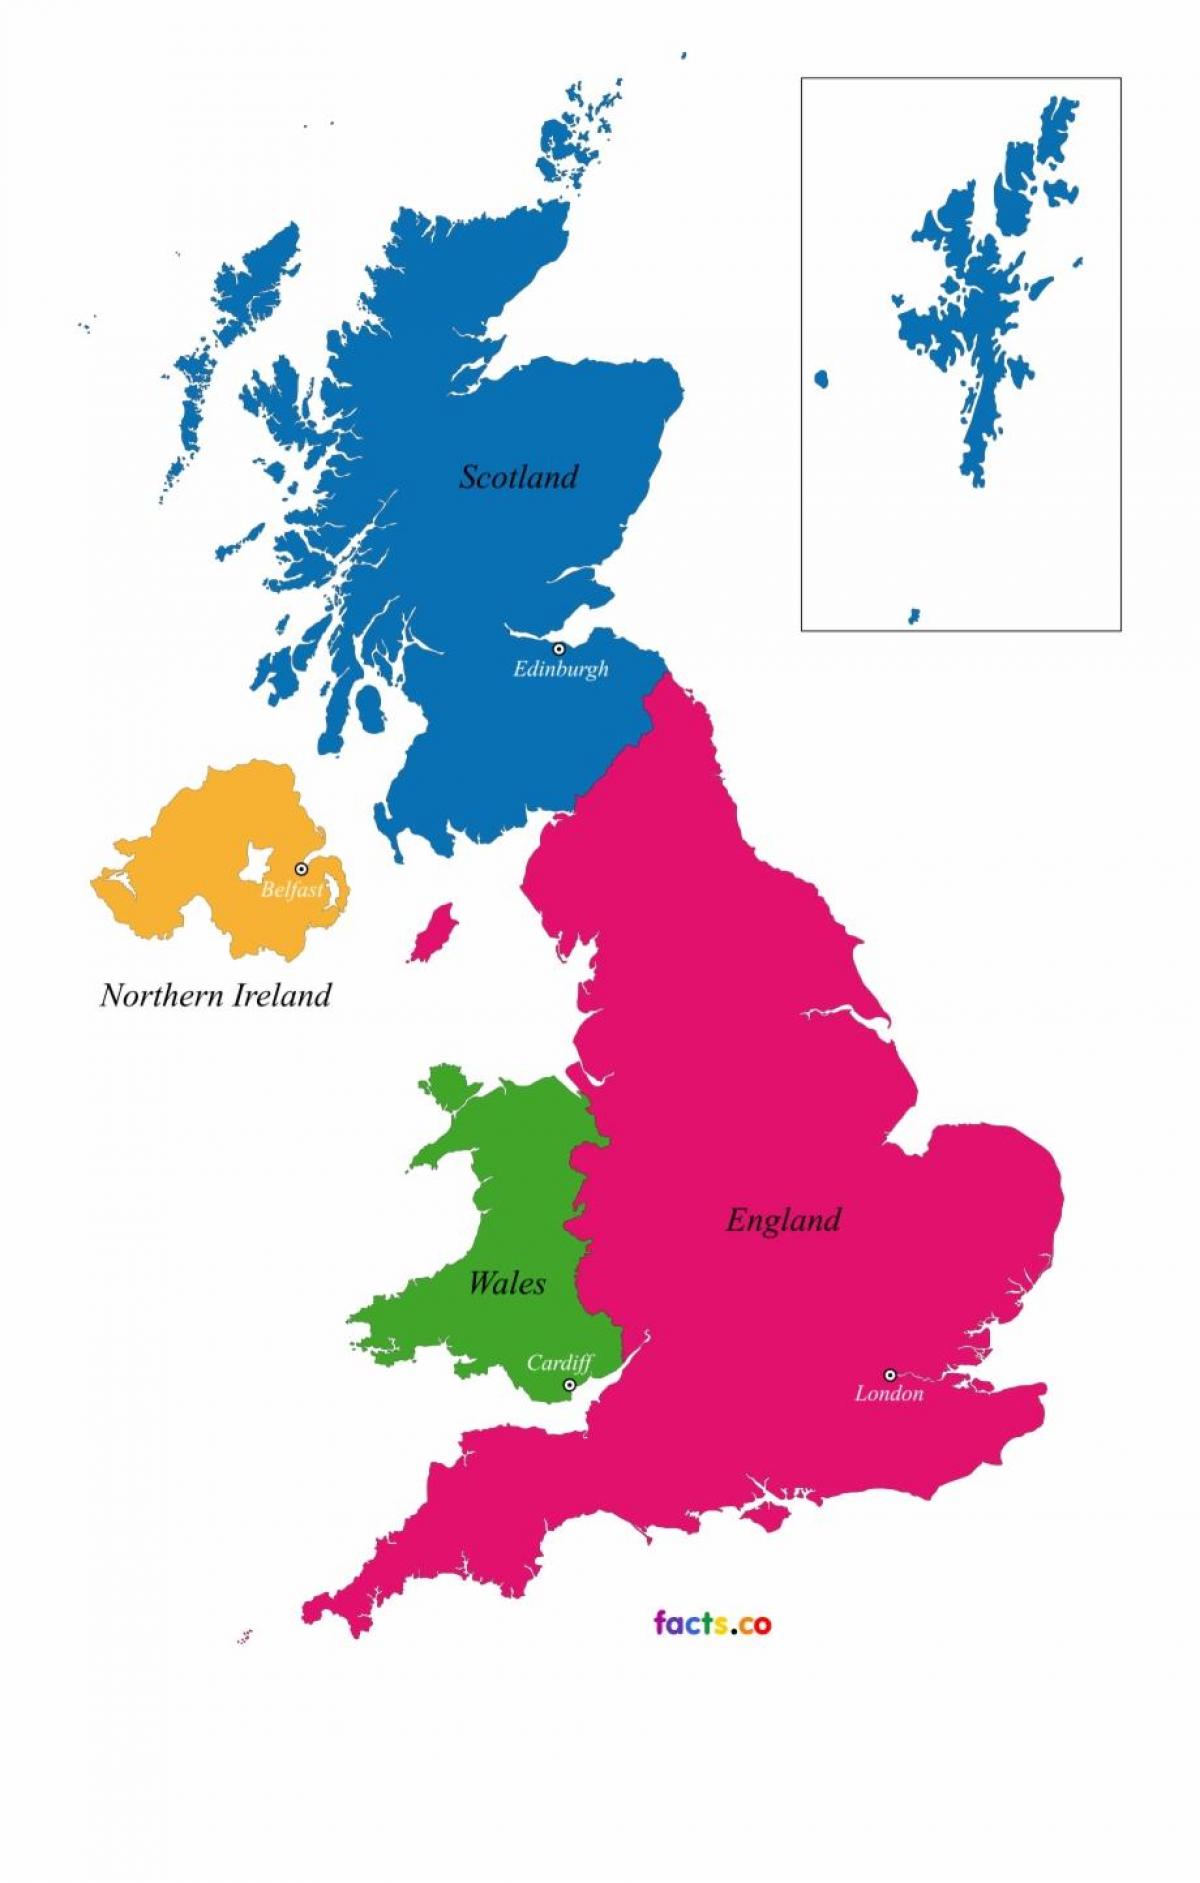 Mapa stanu Zjednoczonego Królestwa (UK)